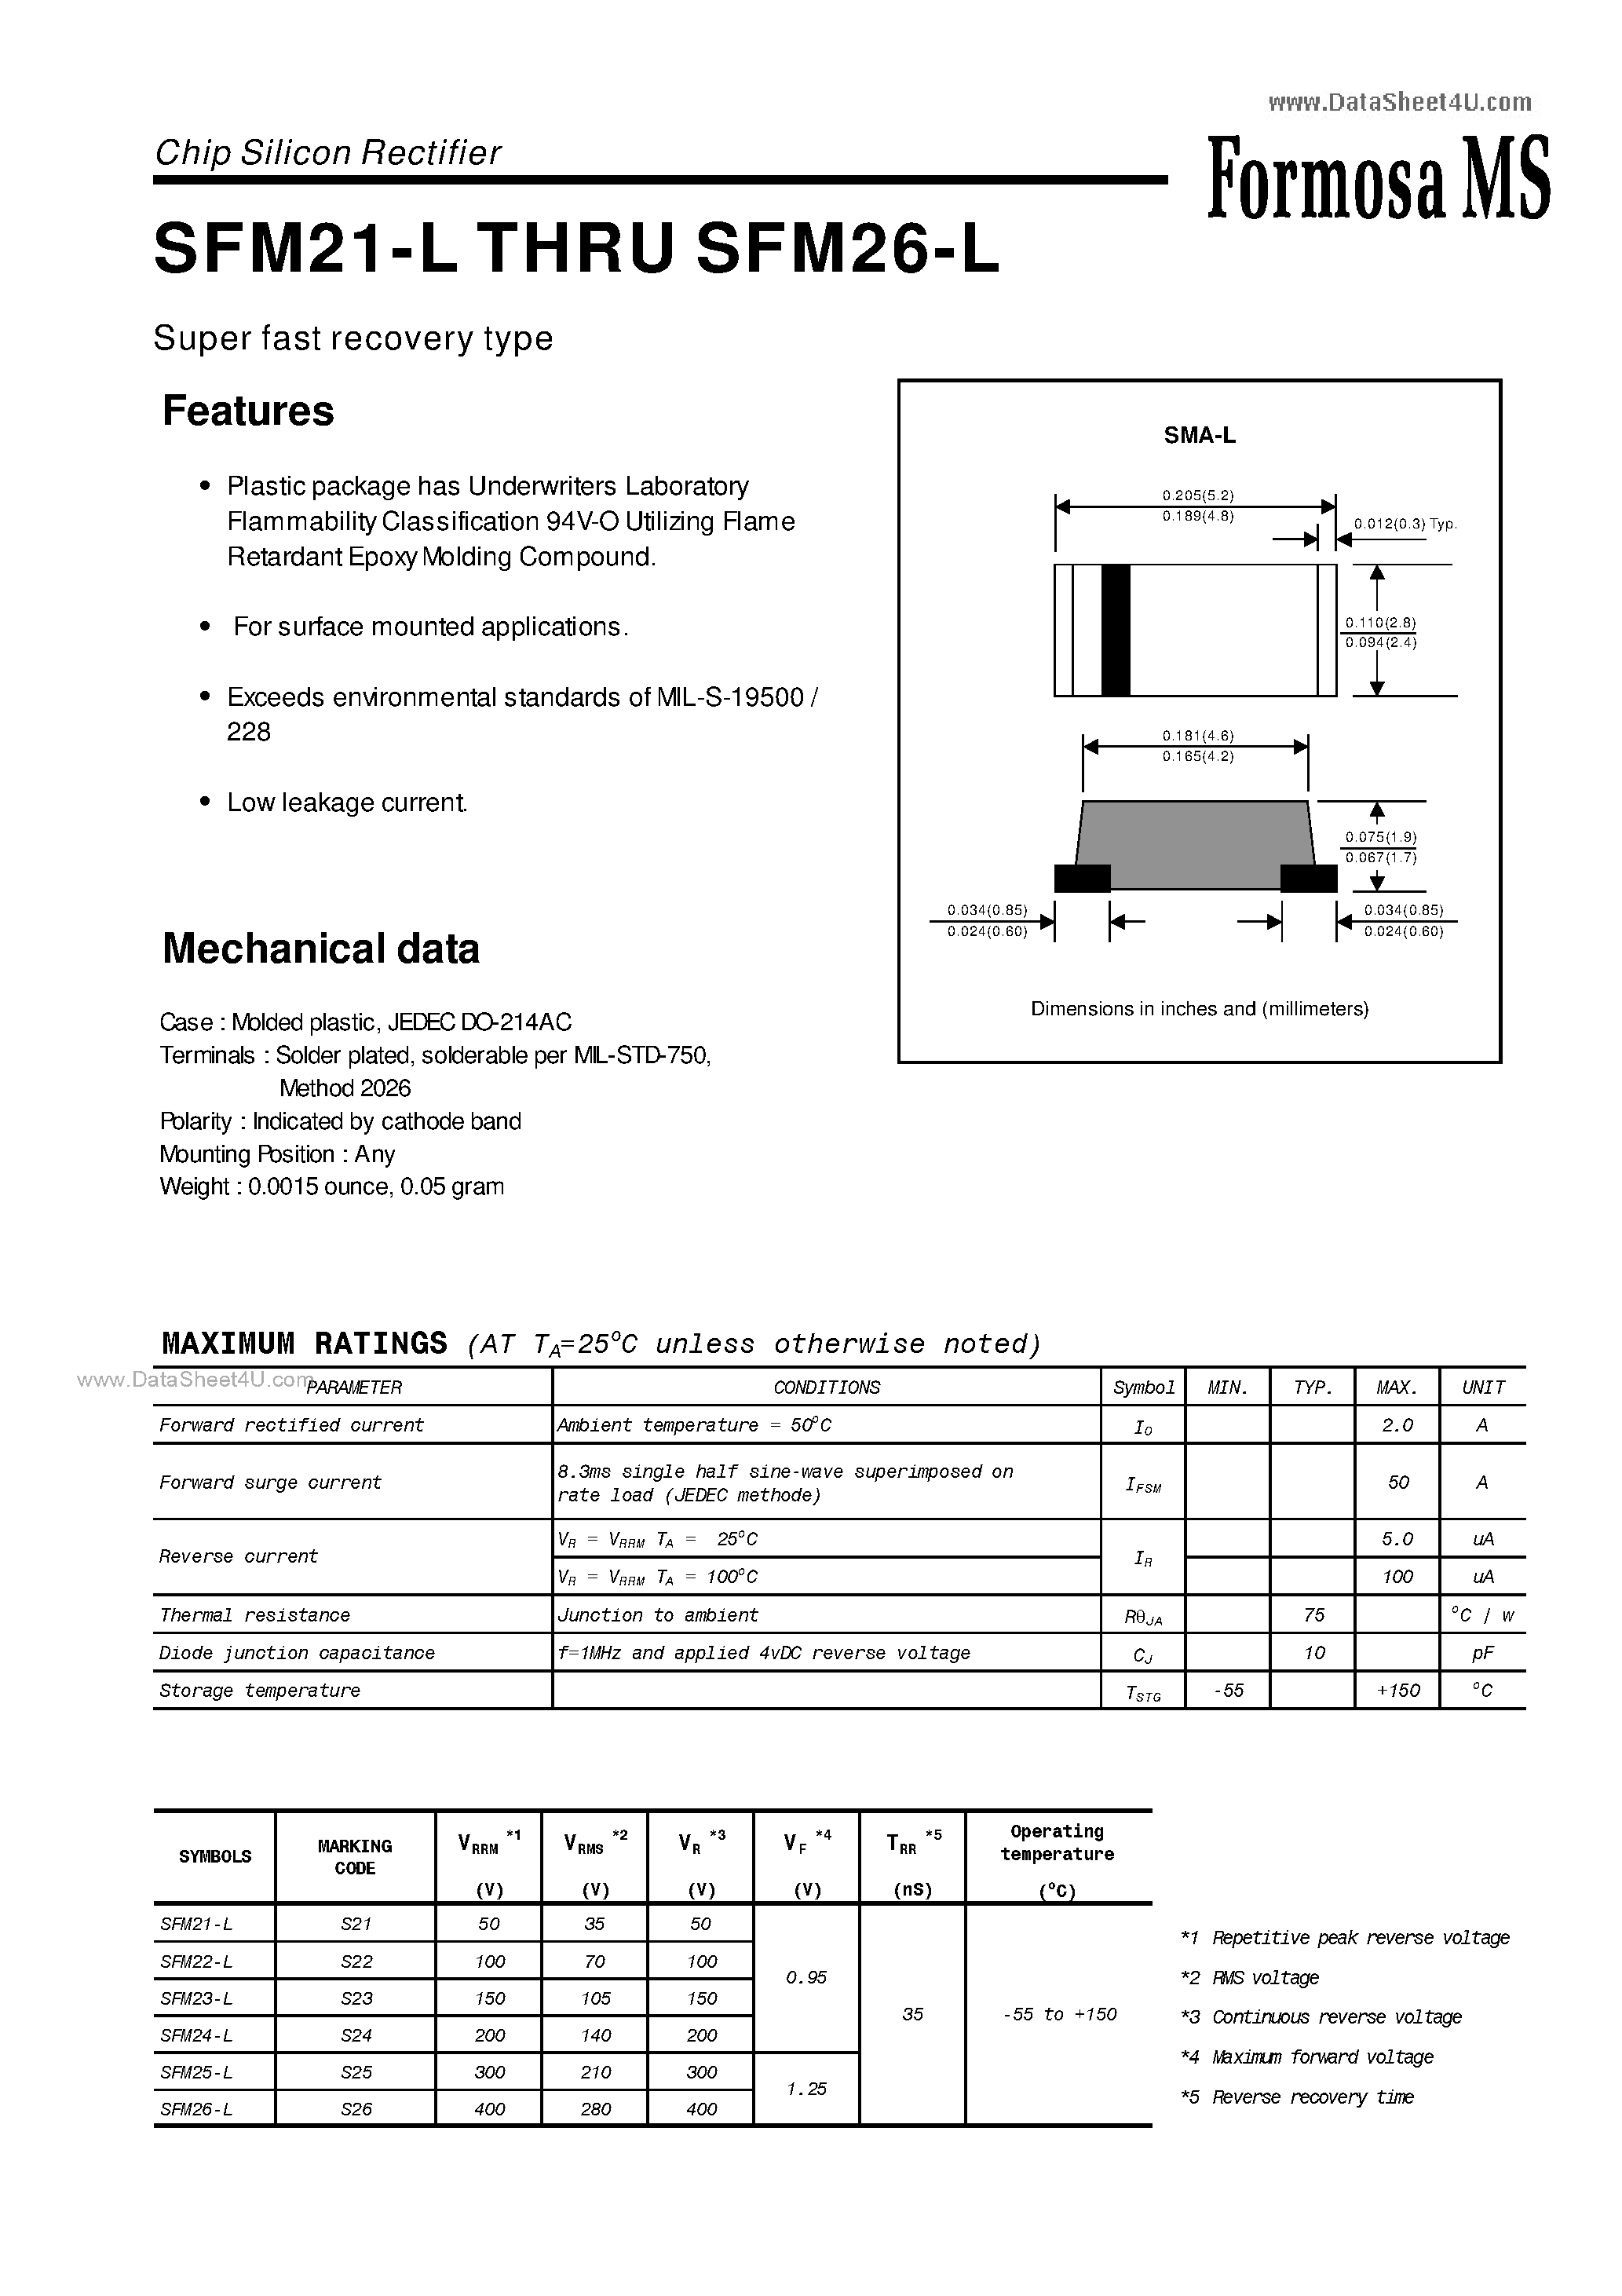 Datasheet SFM21-L - (SFM2x-L) Chip Silicon Rectifier page 1